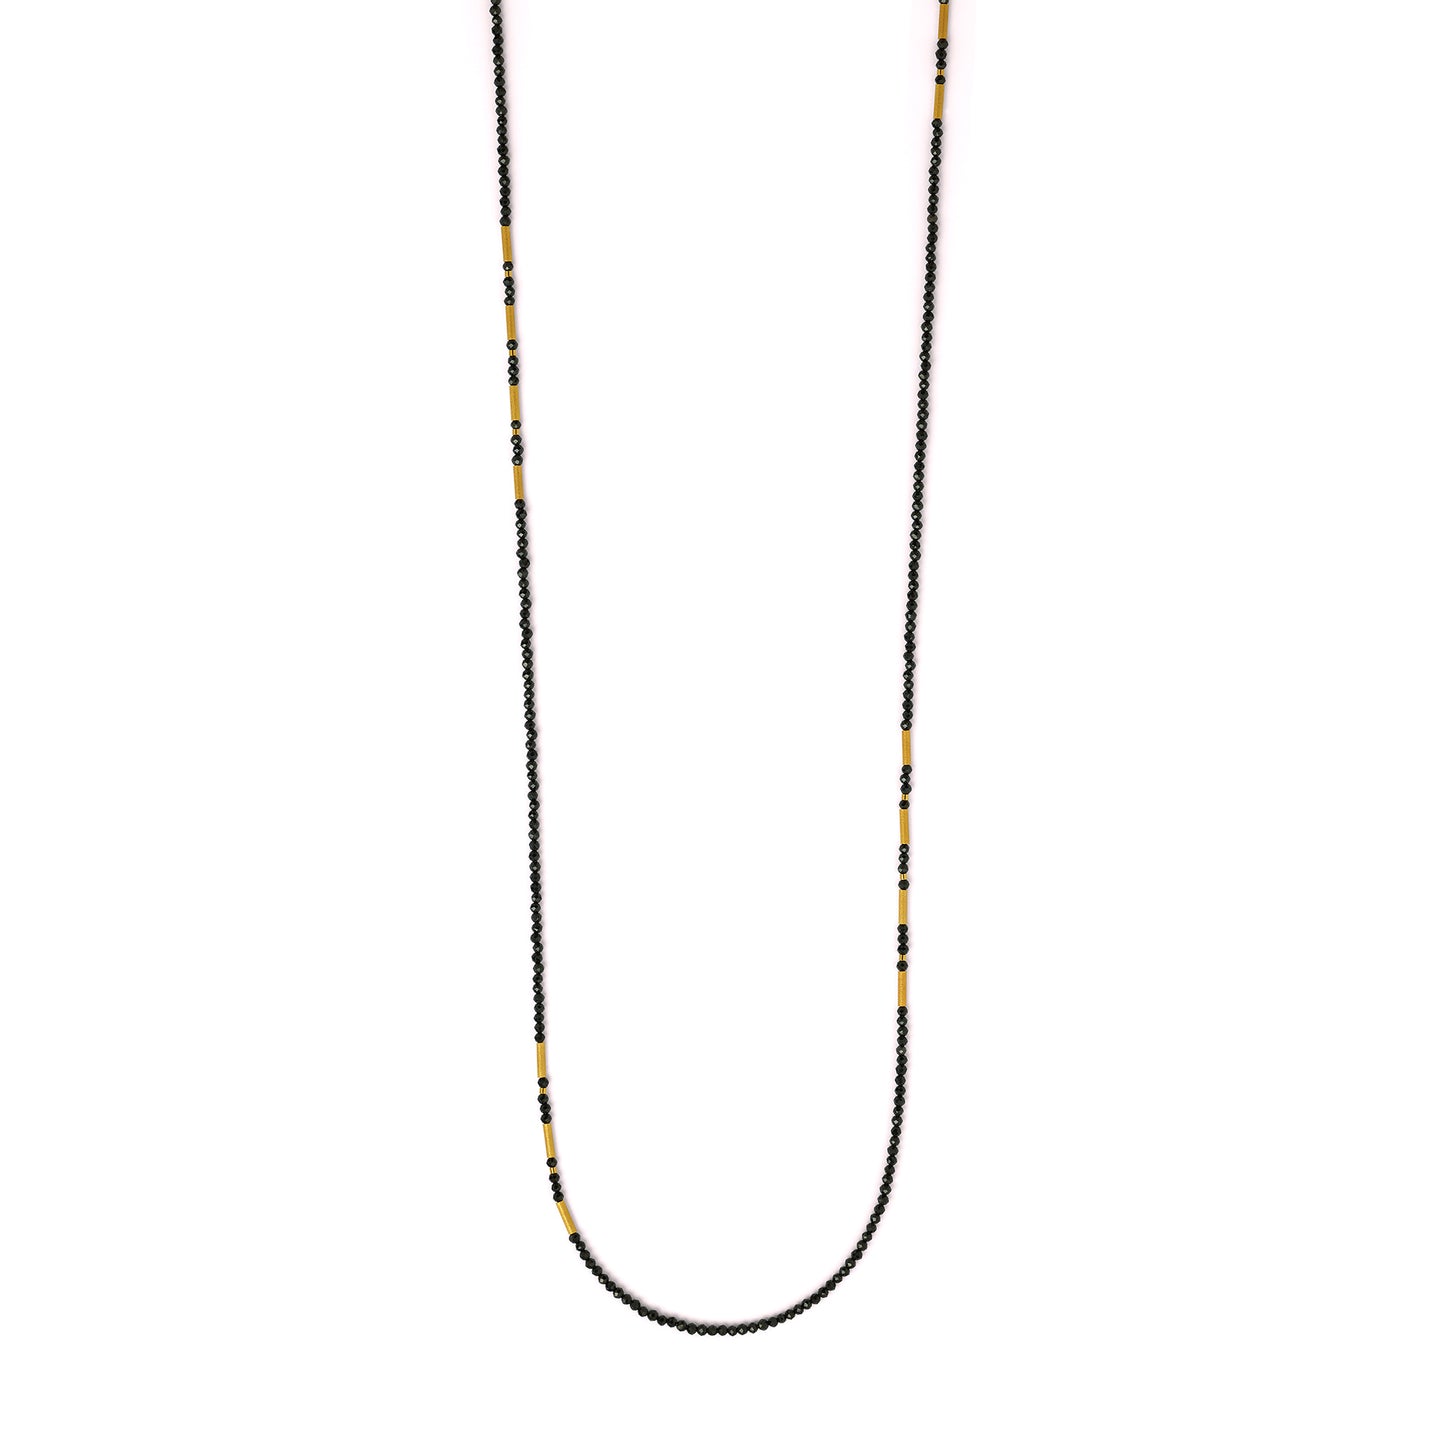 Bernd Wolf Collection "Landalon" Black Spinel Necklace